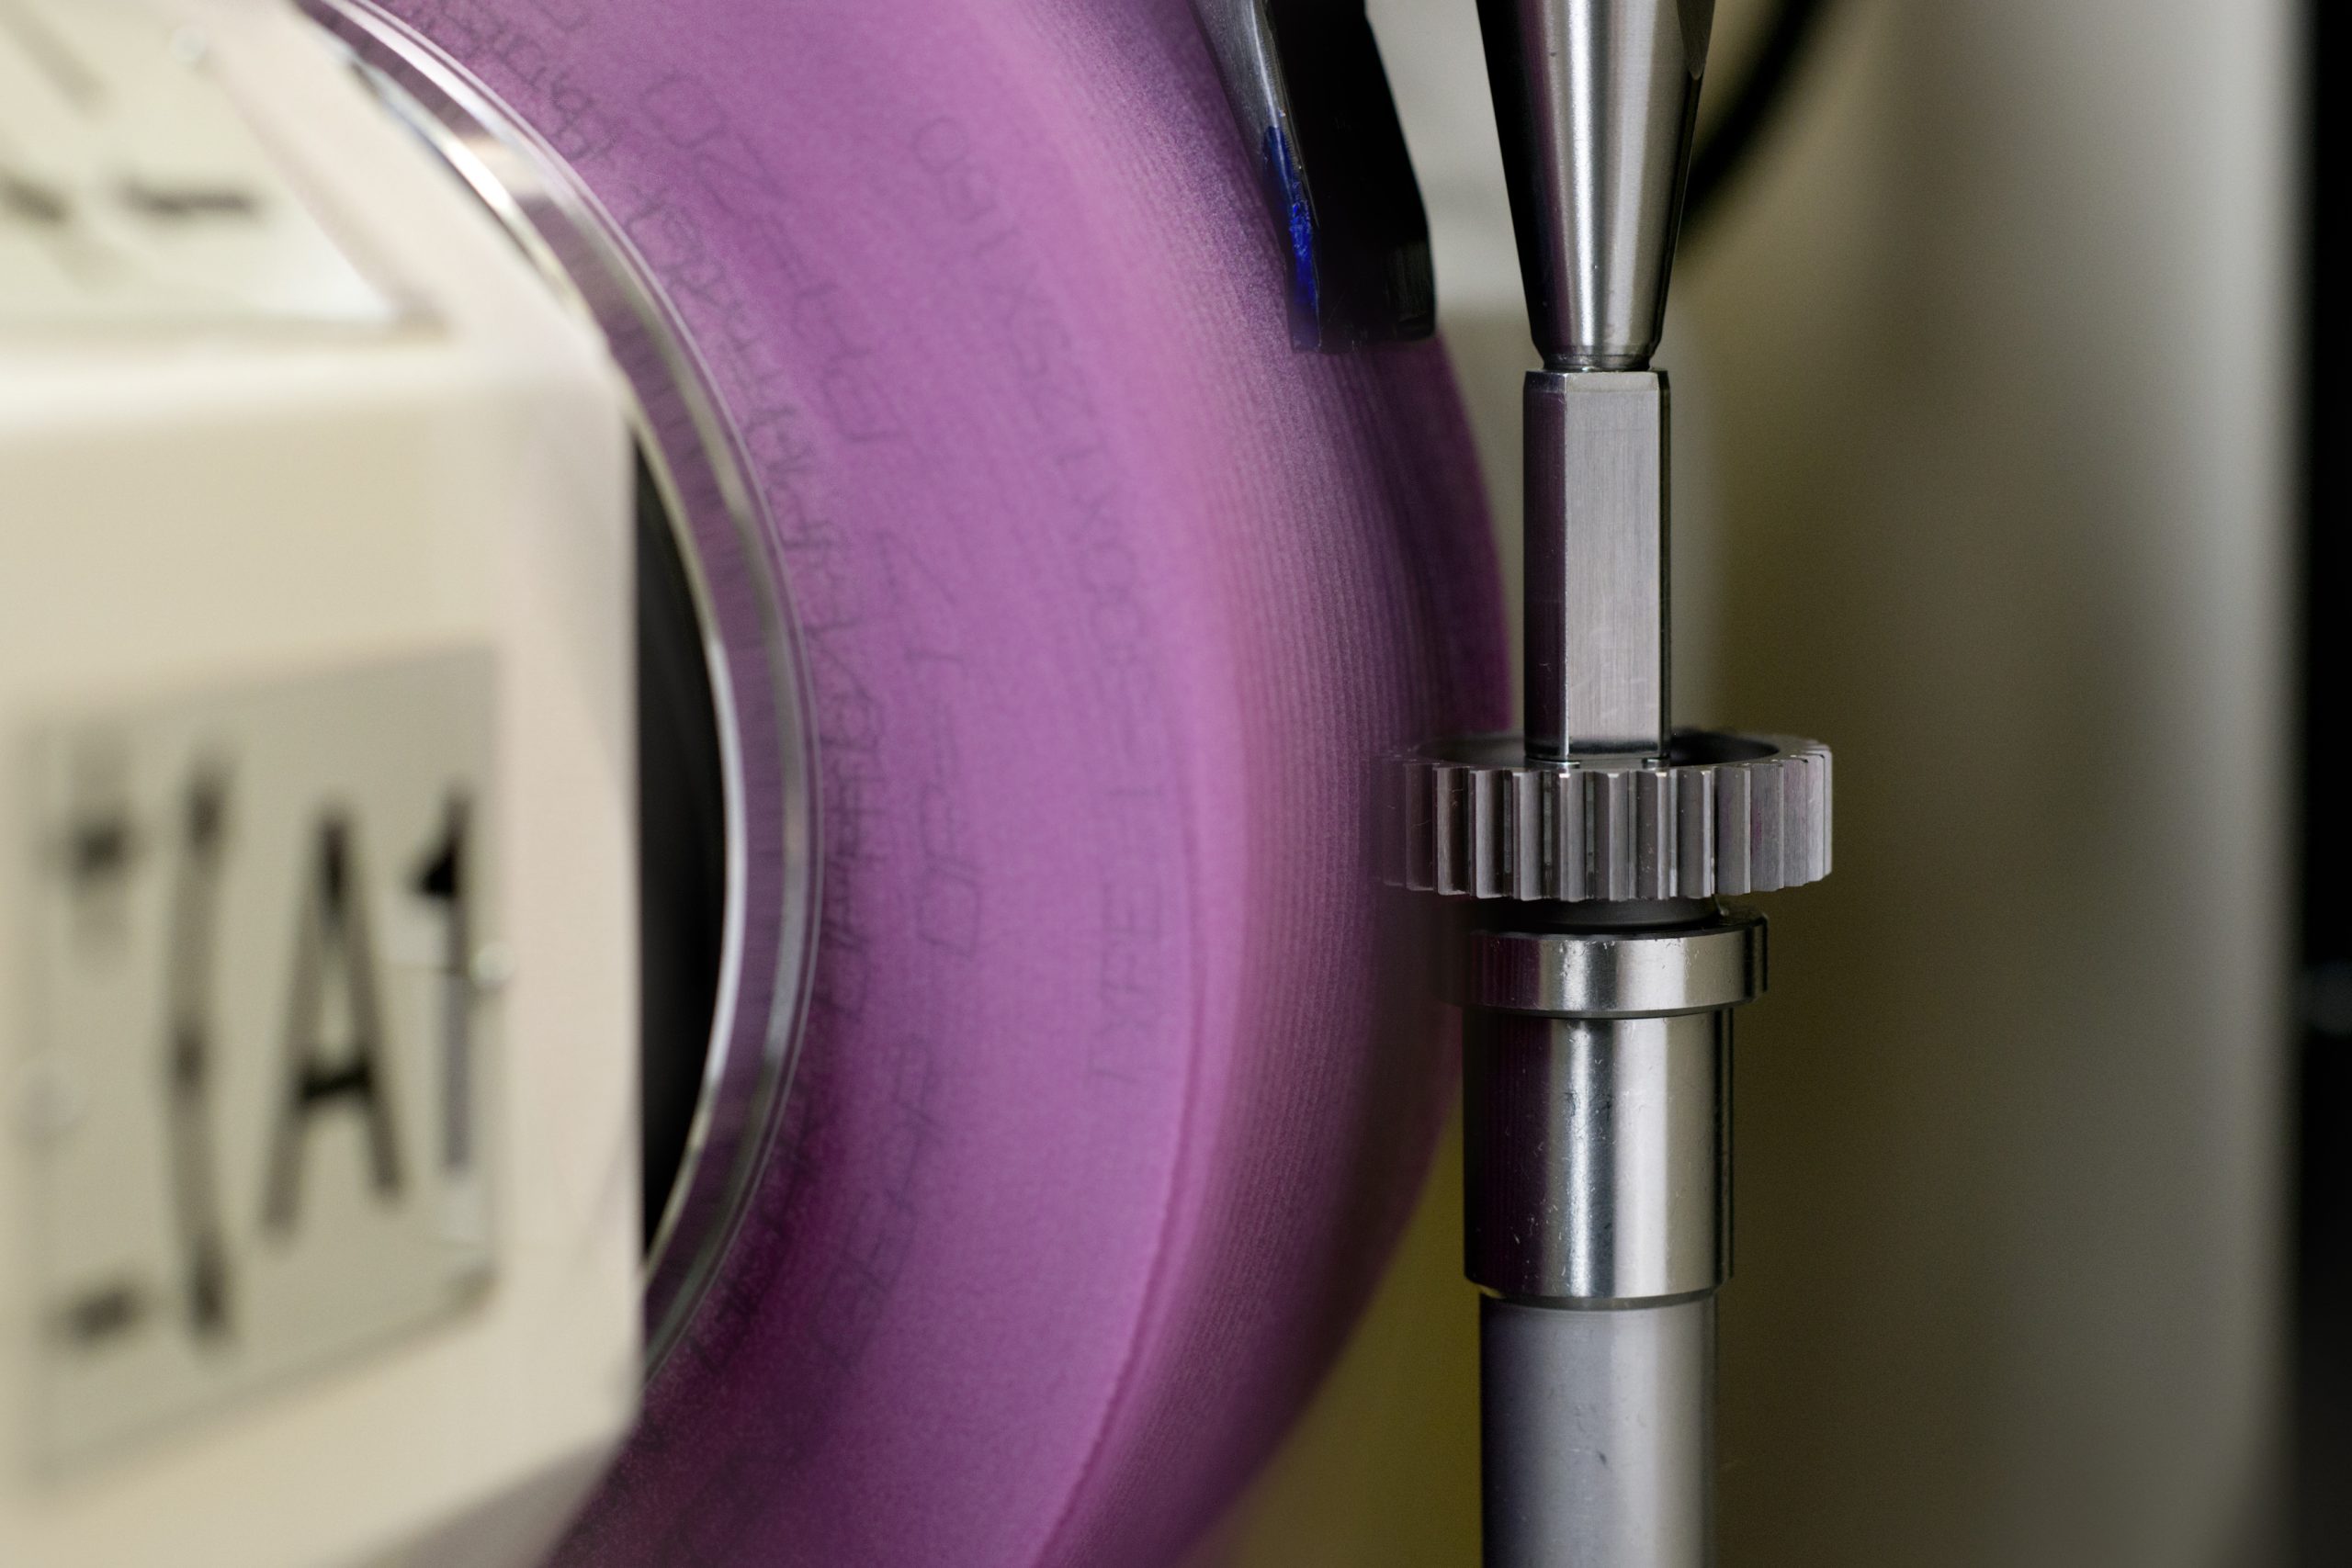 CNC gear grinder manufacturers